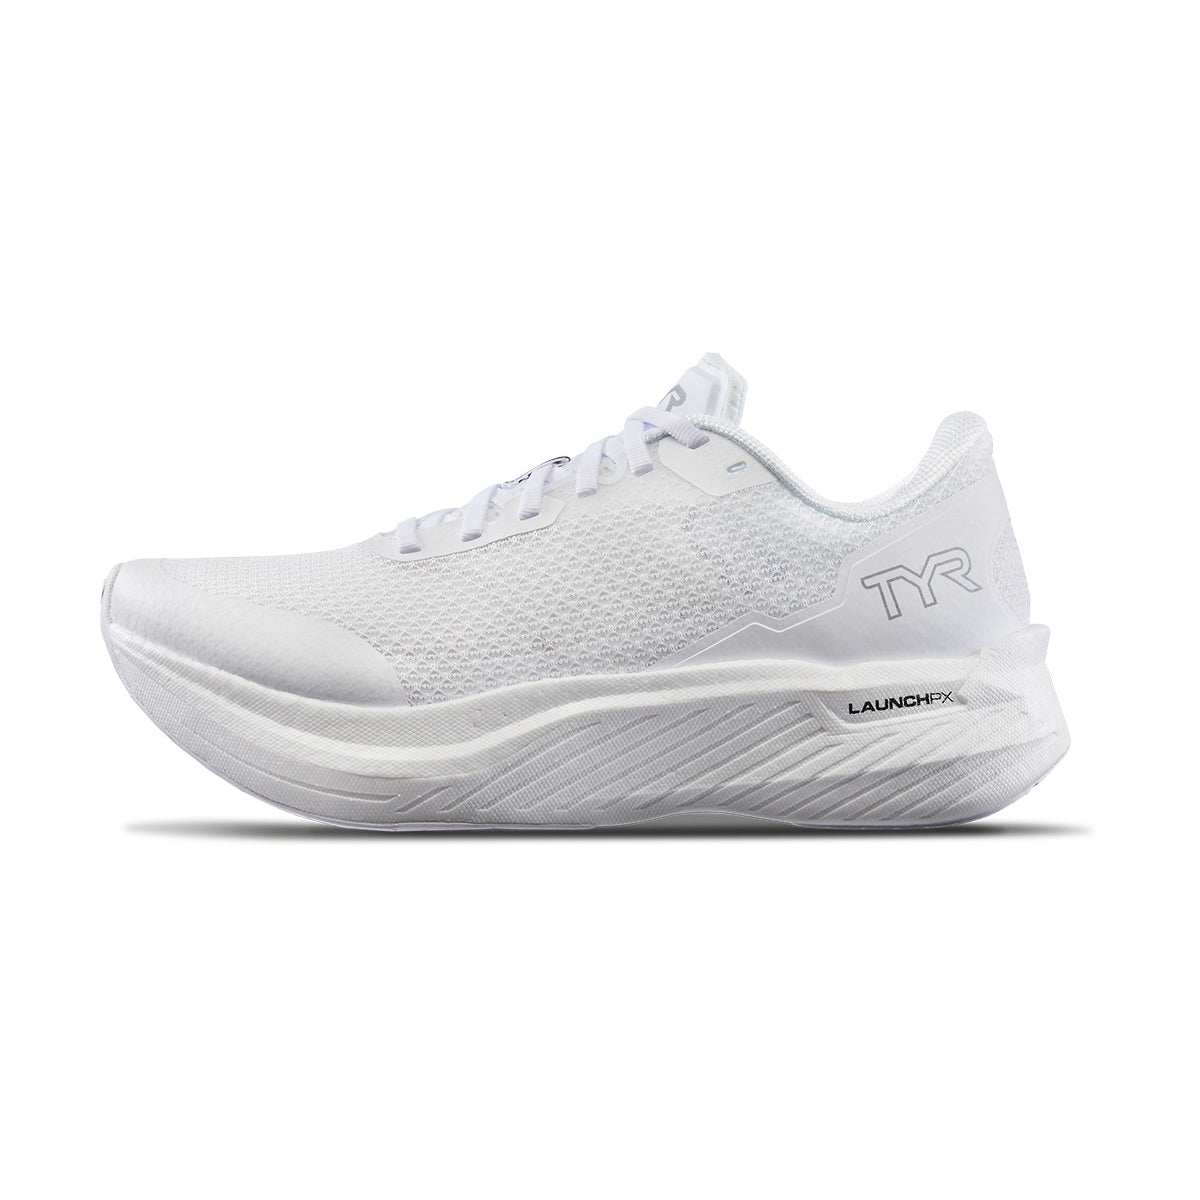 TYR Valkyrie Speedworks Runner Shoes (100 White)